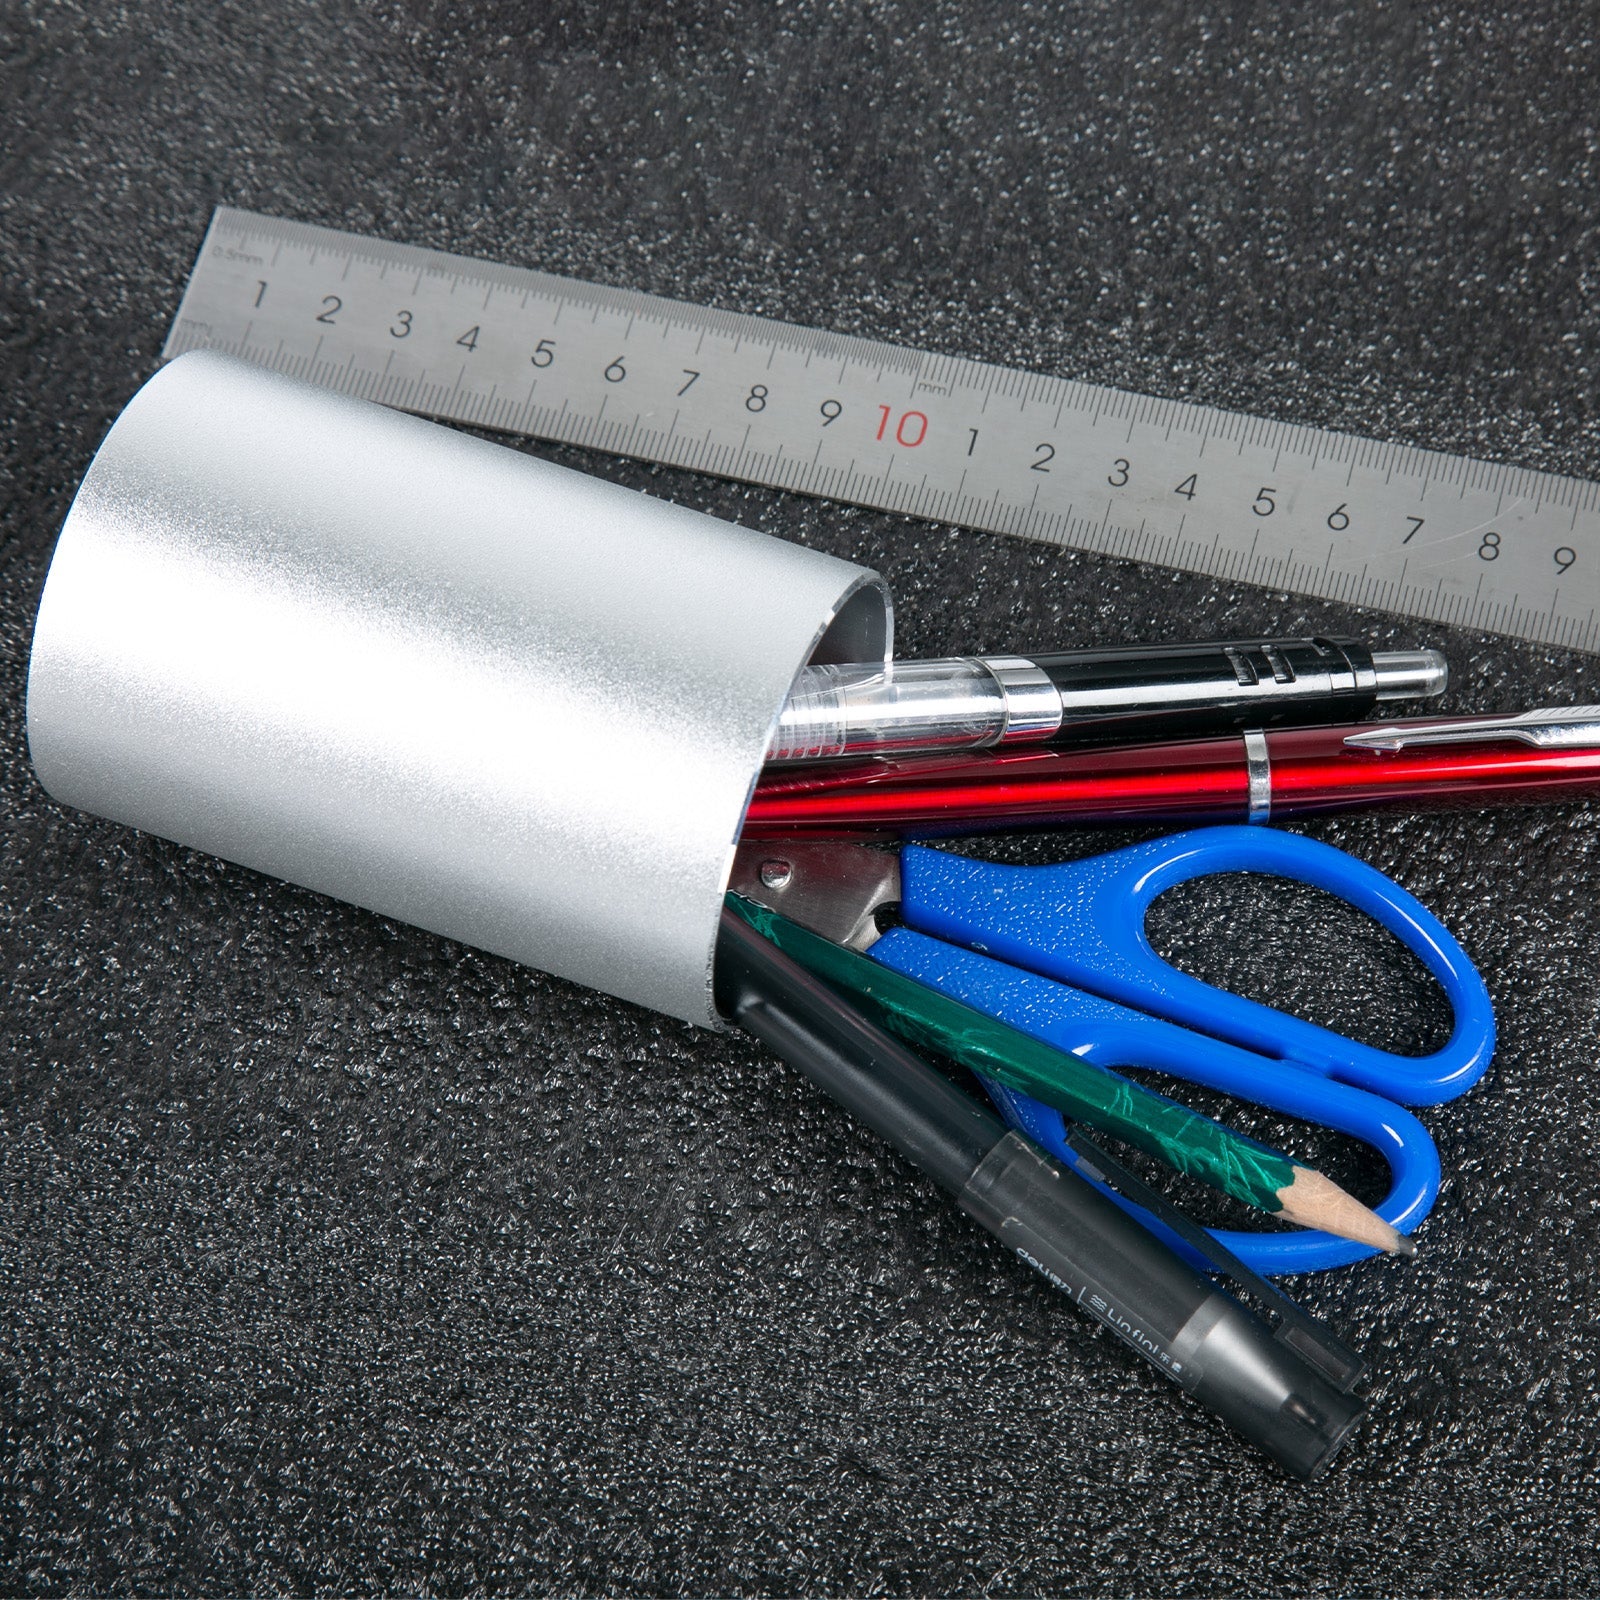 Aluminum Alloy Round Pen Holder Desktop Makeup Storage Organizer for Home Office School